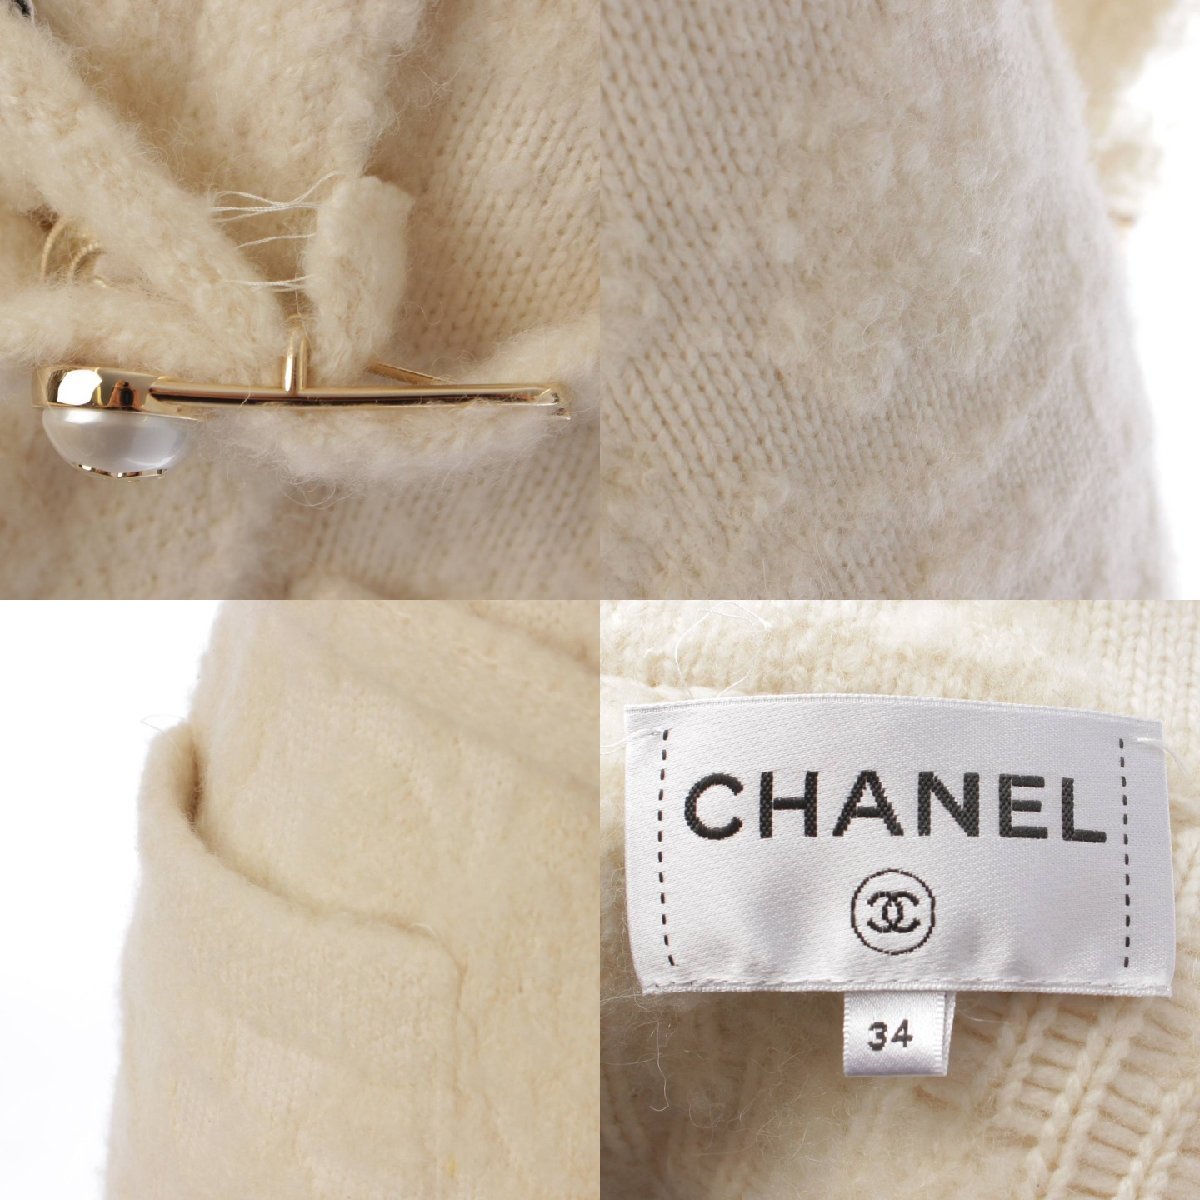 [ Chanel ]Chanel здесь кнопка вязаный кашемир альпака bell tedo пальто P65195 белый 34 [ б/у ][ стандартный товар гарантия ]182118